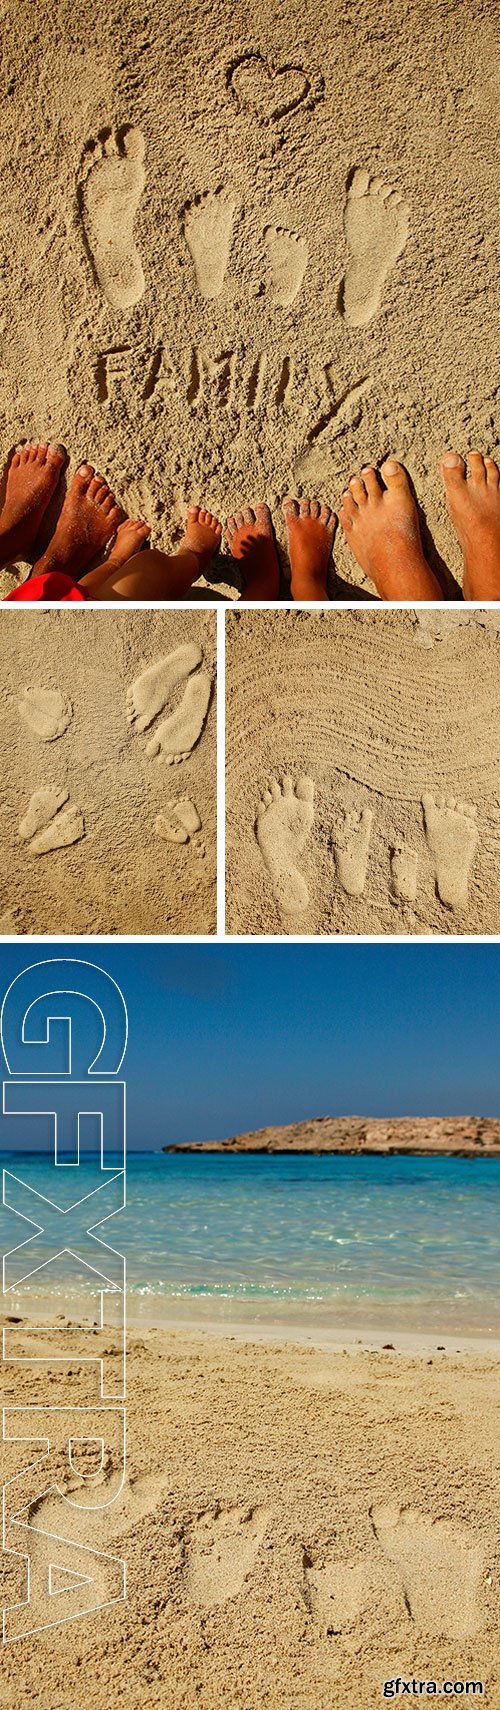 Stock Photos - A family footprints in the sand on the beach